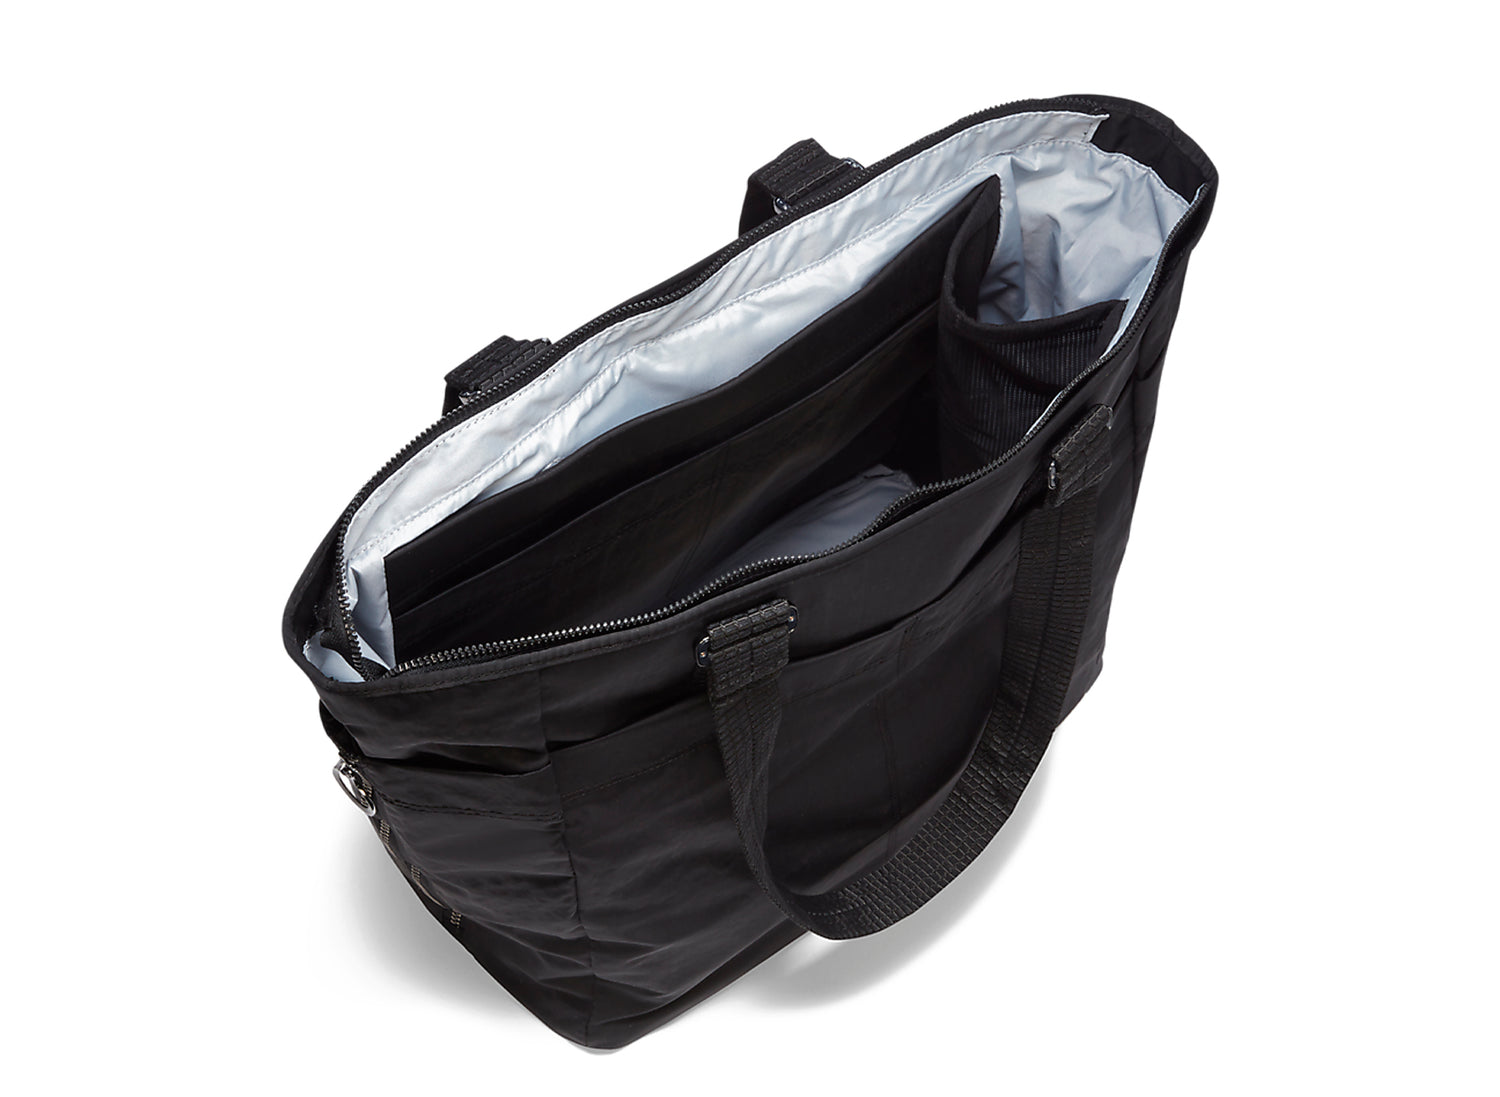 Nike Women's One Lux Tote Bag, Black/Black